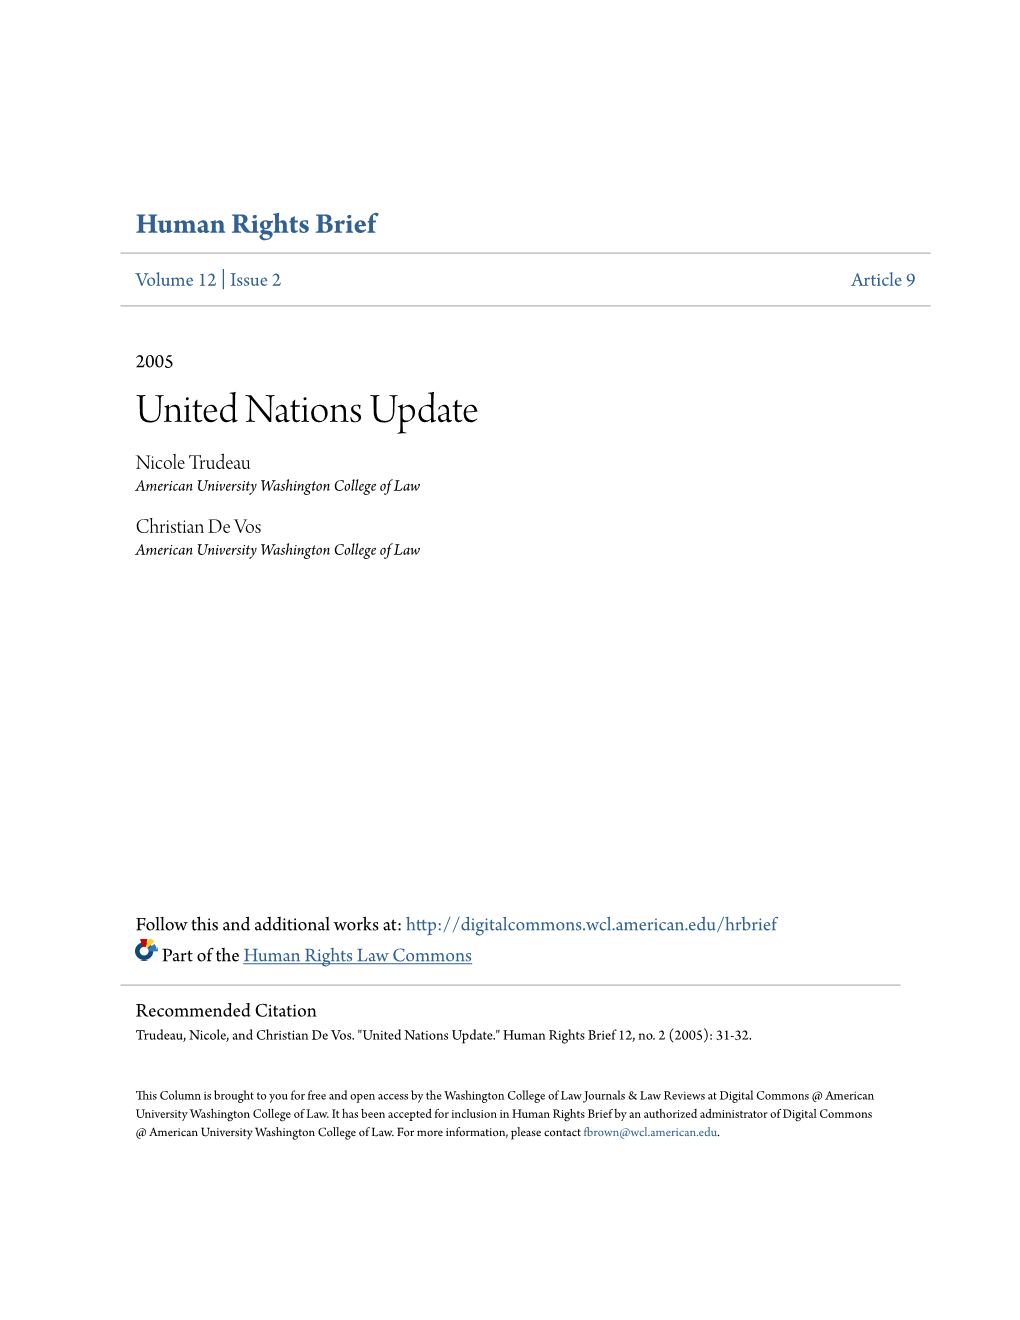 United Nations Update Nicole Trudeau American University Washington College of Law